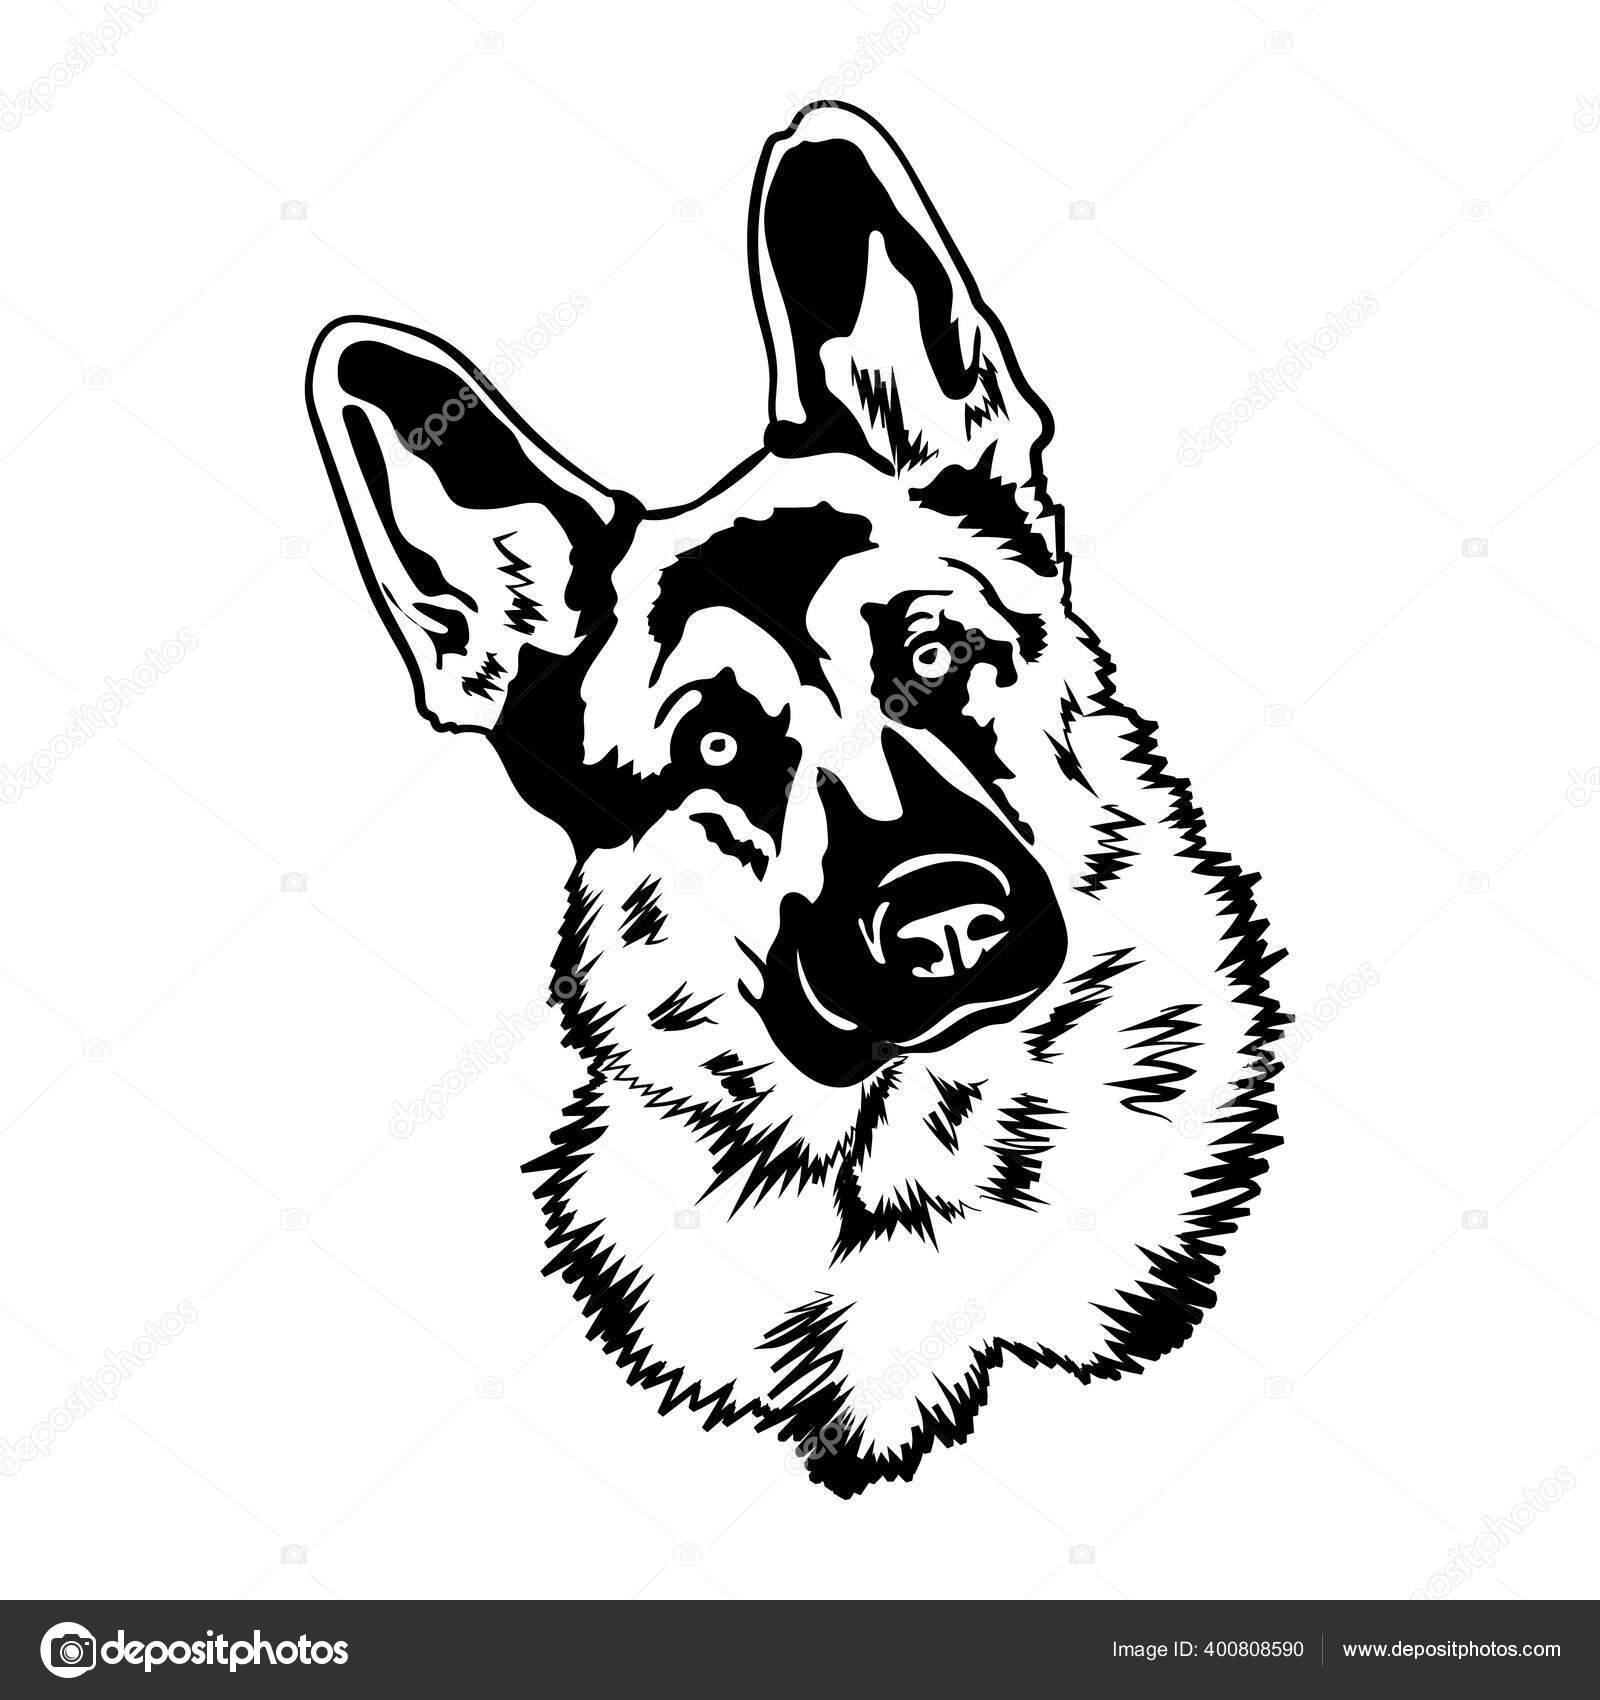 German Shepherd Svg Dog Stock Vector by ©isstrip68.gmail.com 400808590